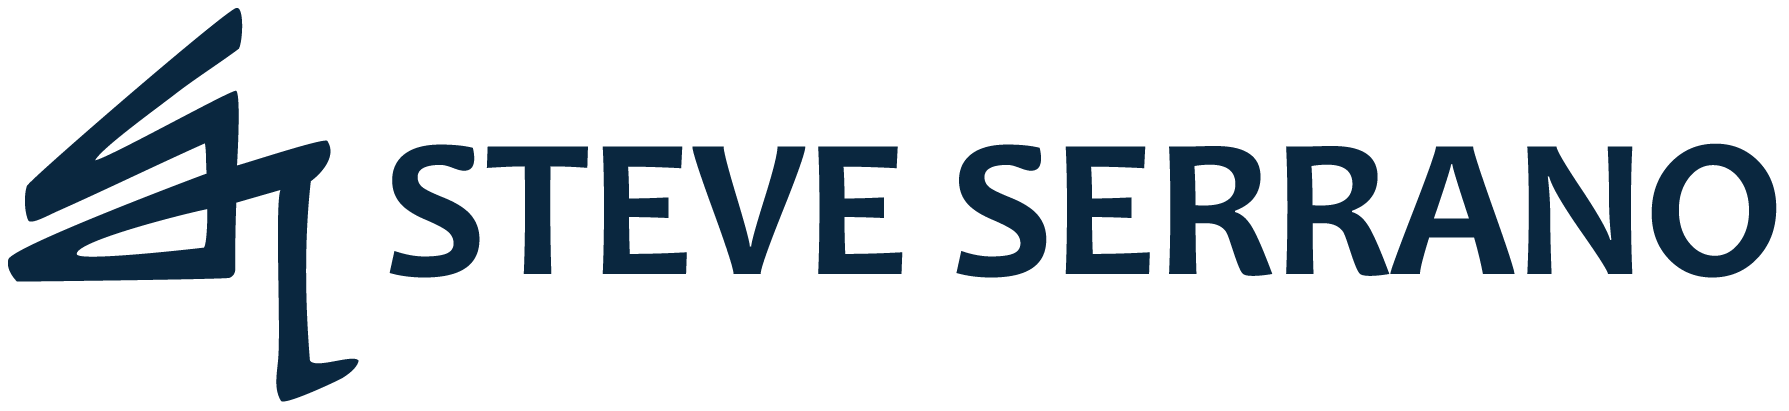 Steve Serrano Logo